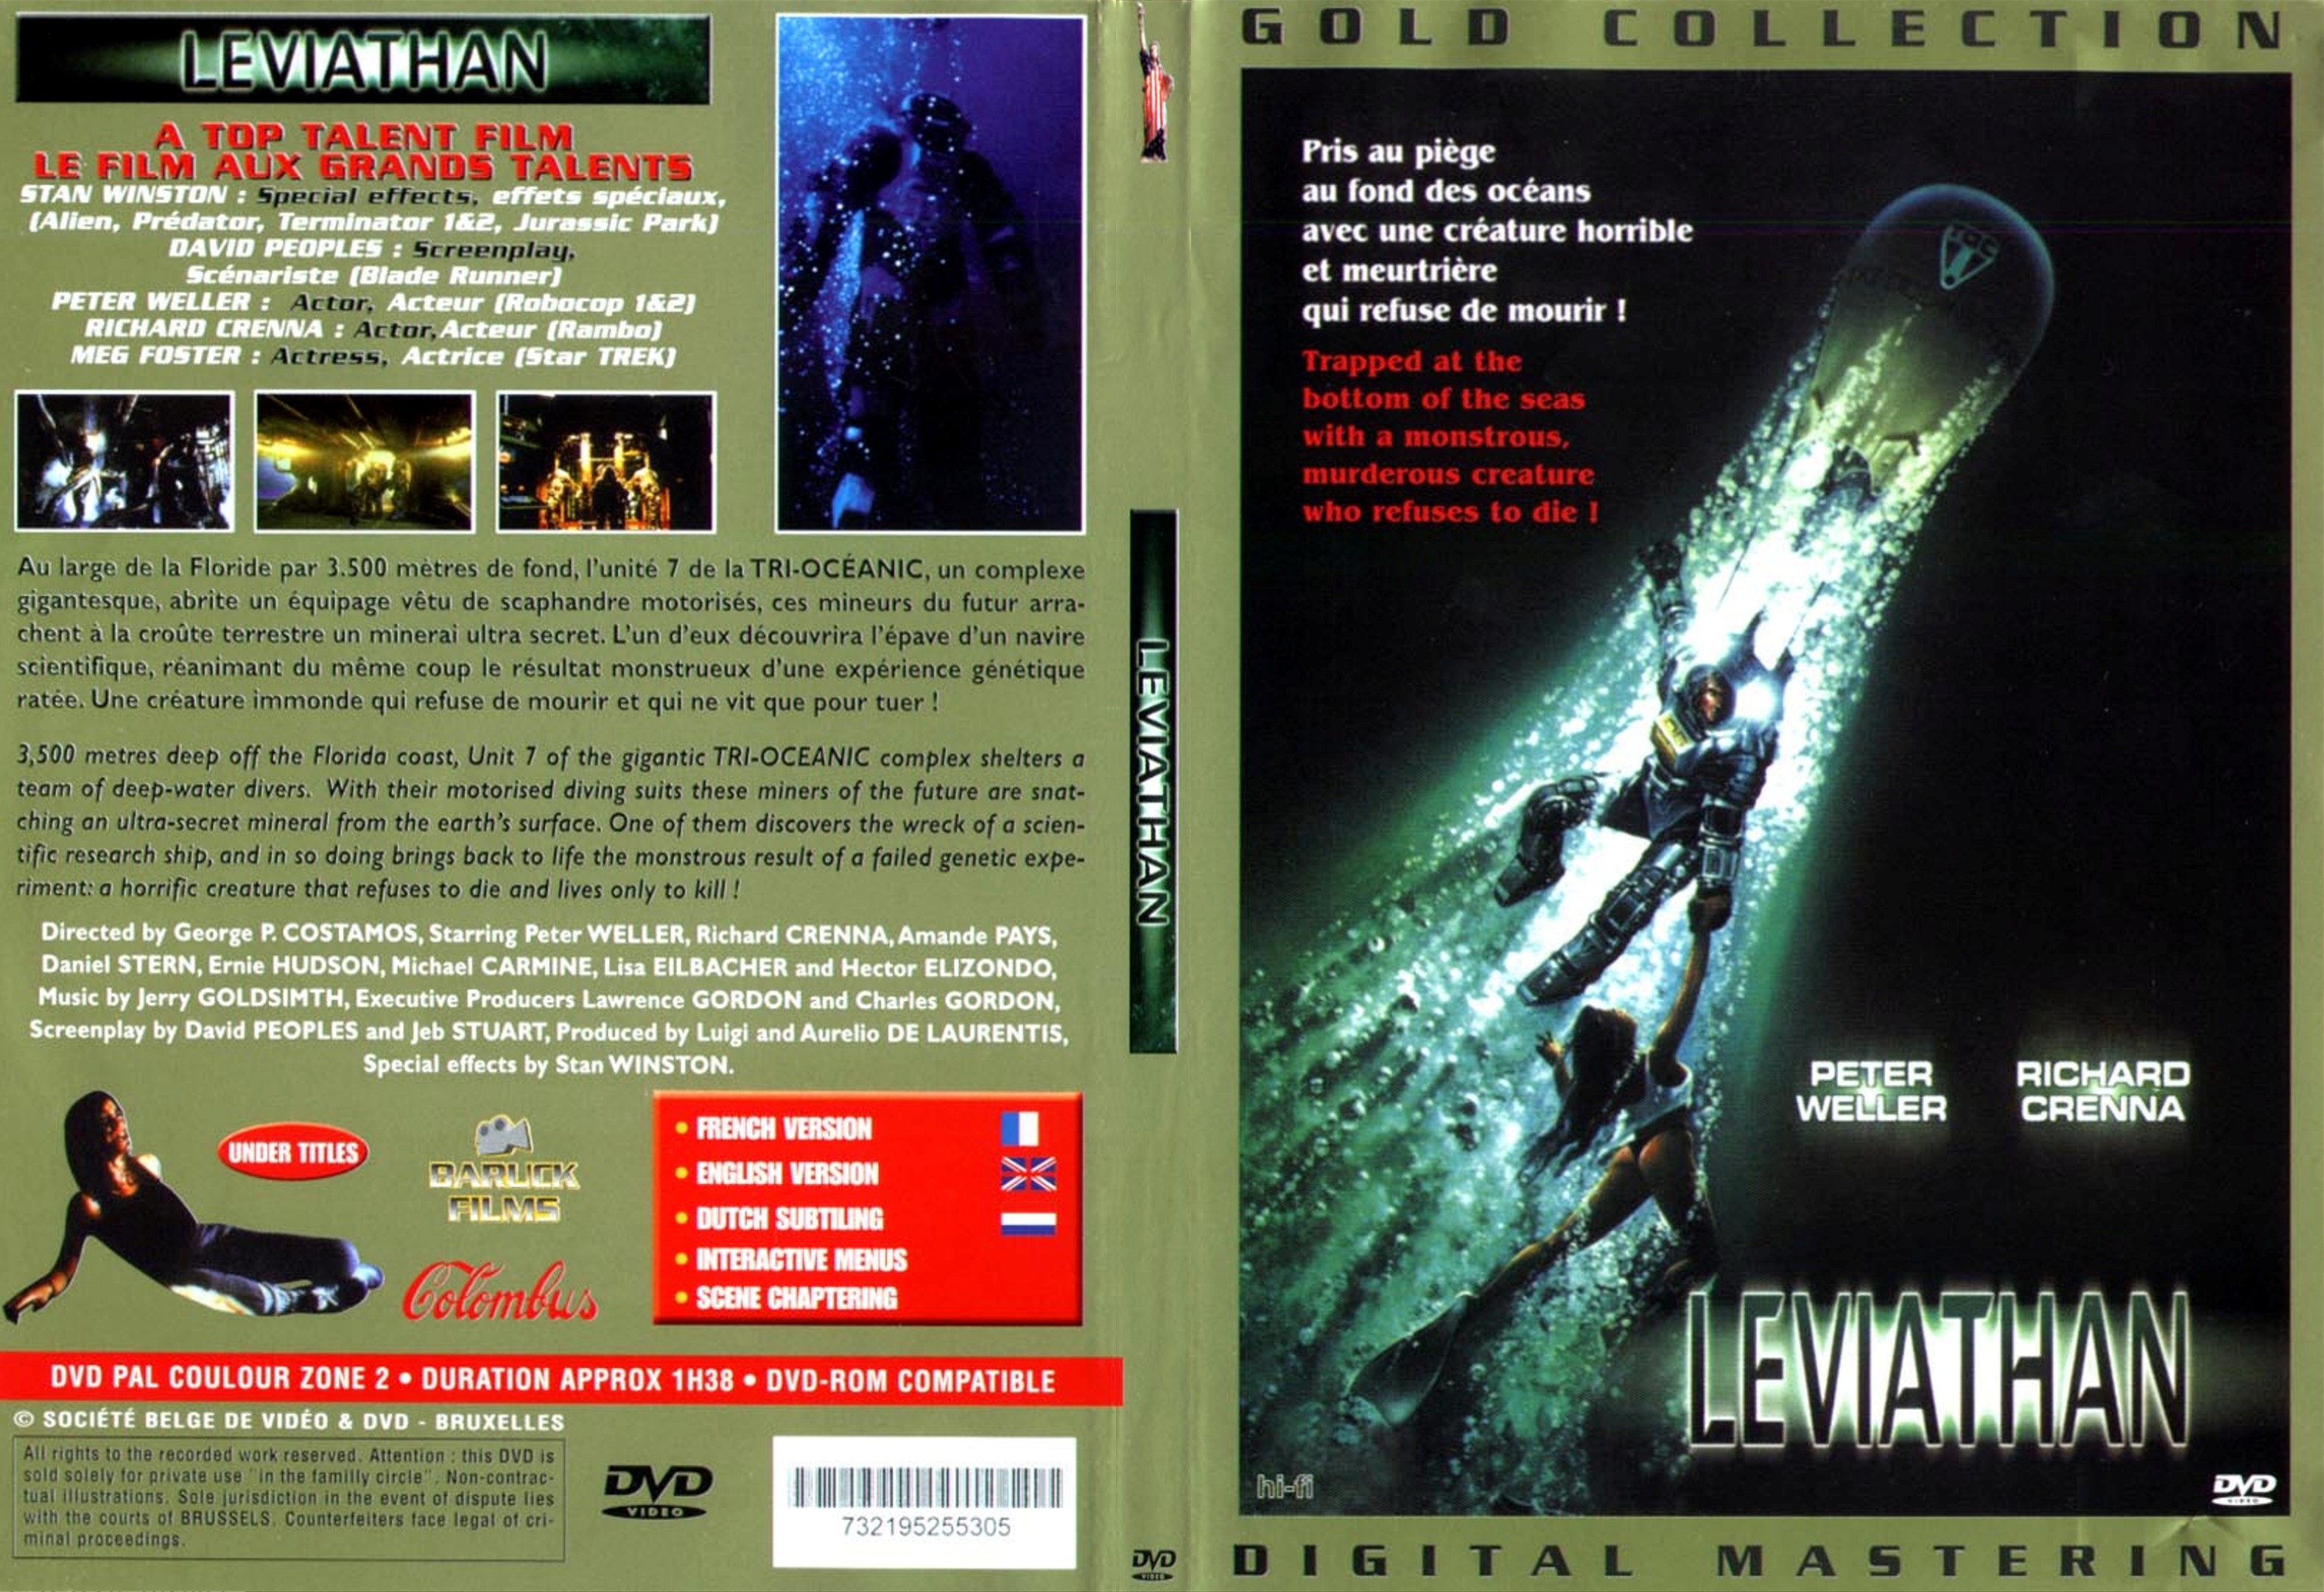 Jaquette DVD Leviathan - SLIM